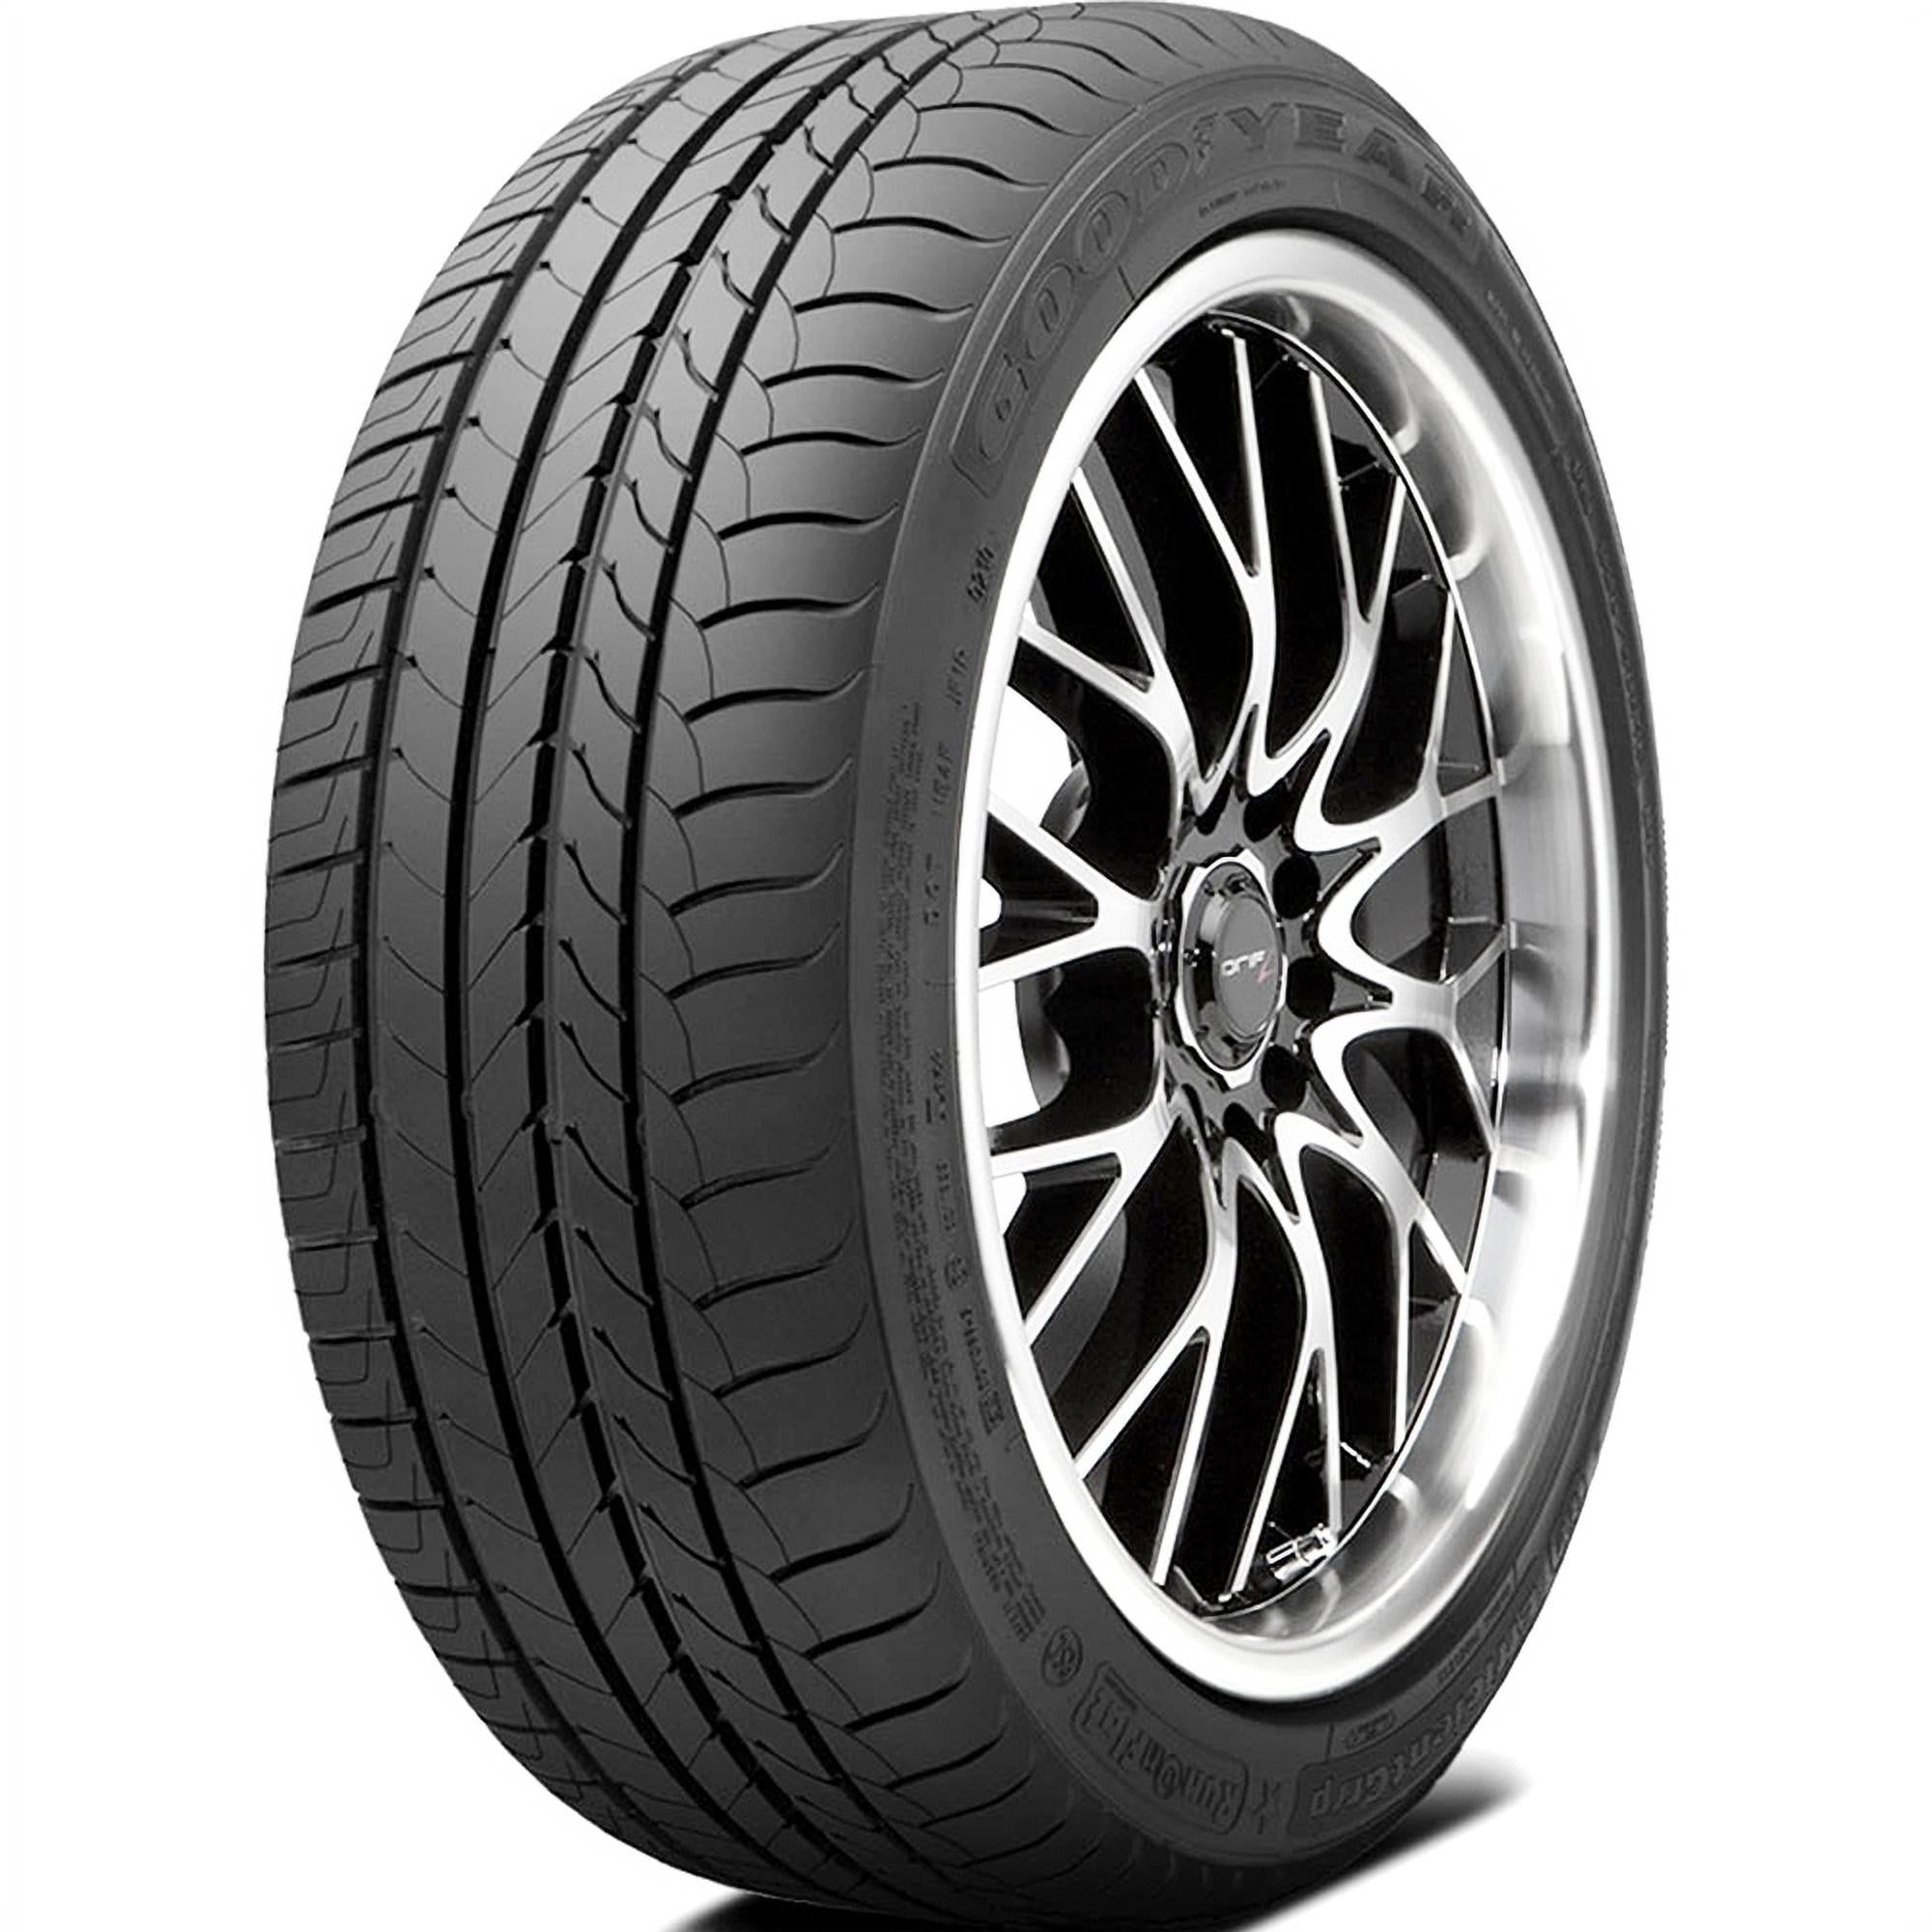 Goodyear EfficientGrip ROF 225/45R17 91W Run Flat High Performance Tire -  Walmart.com